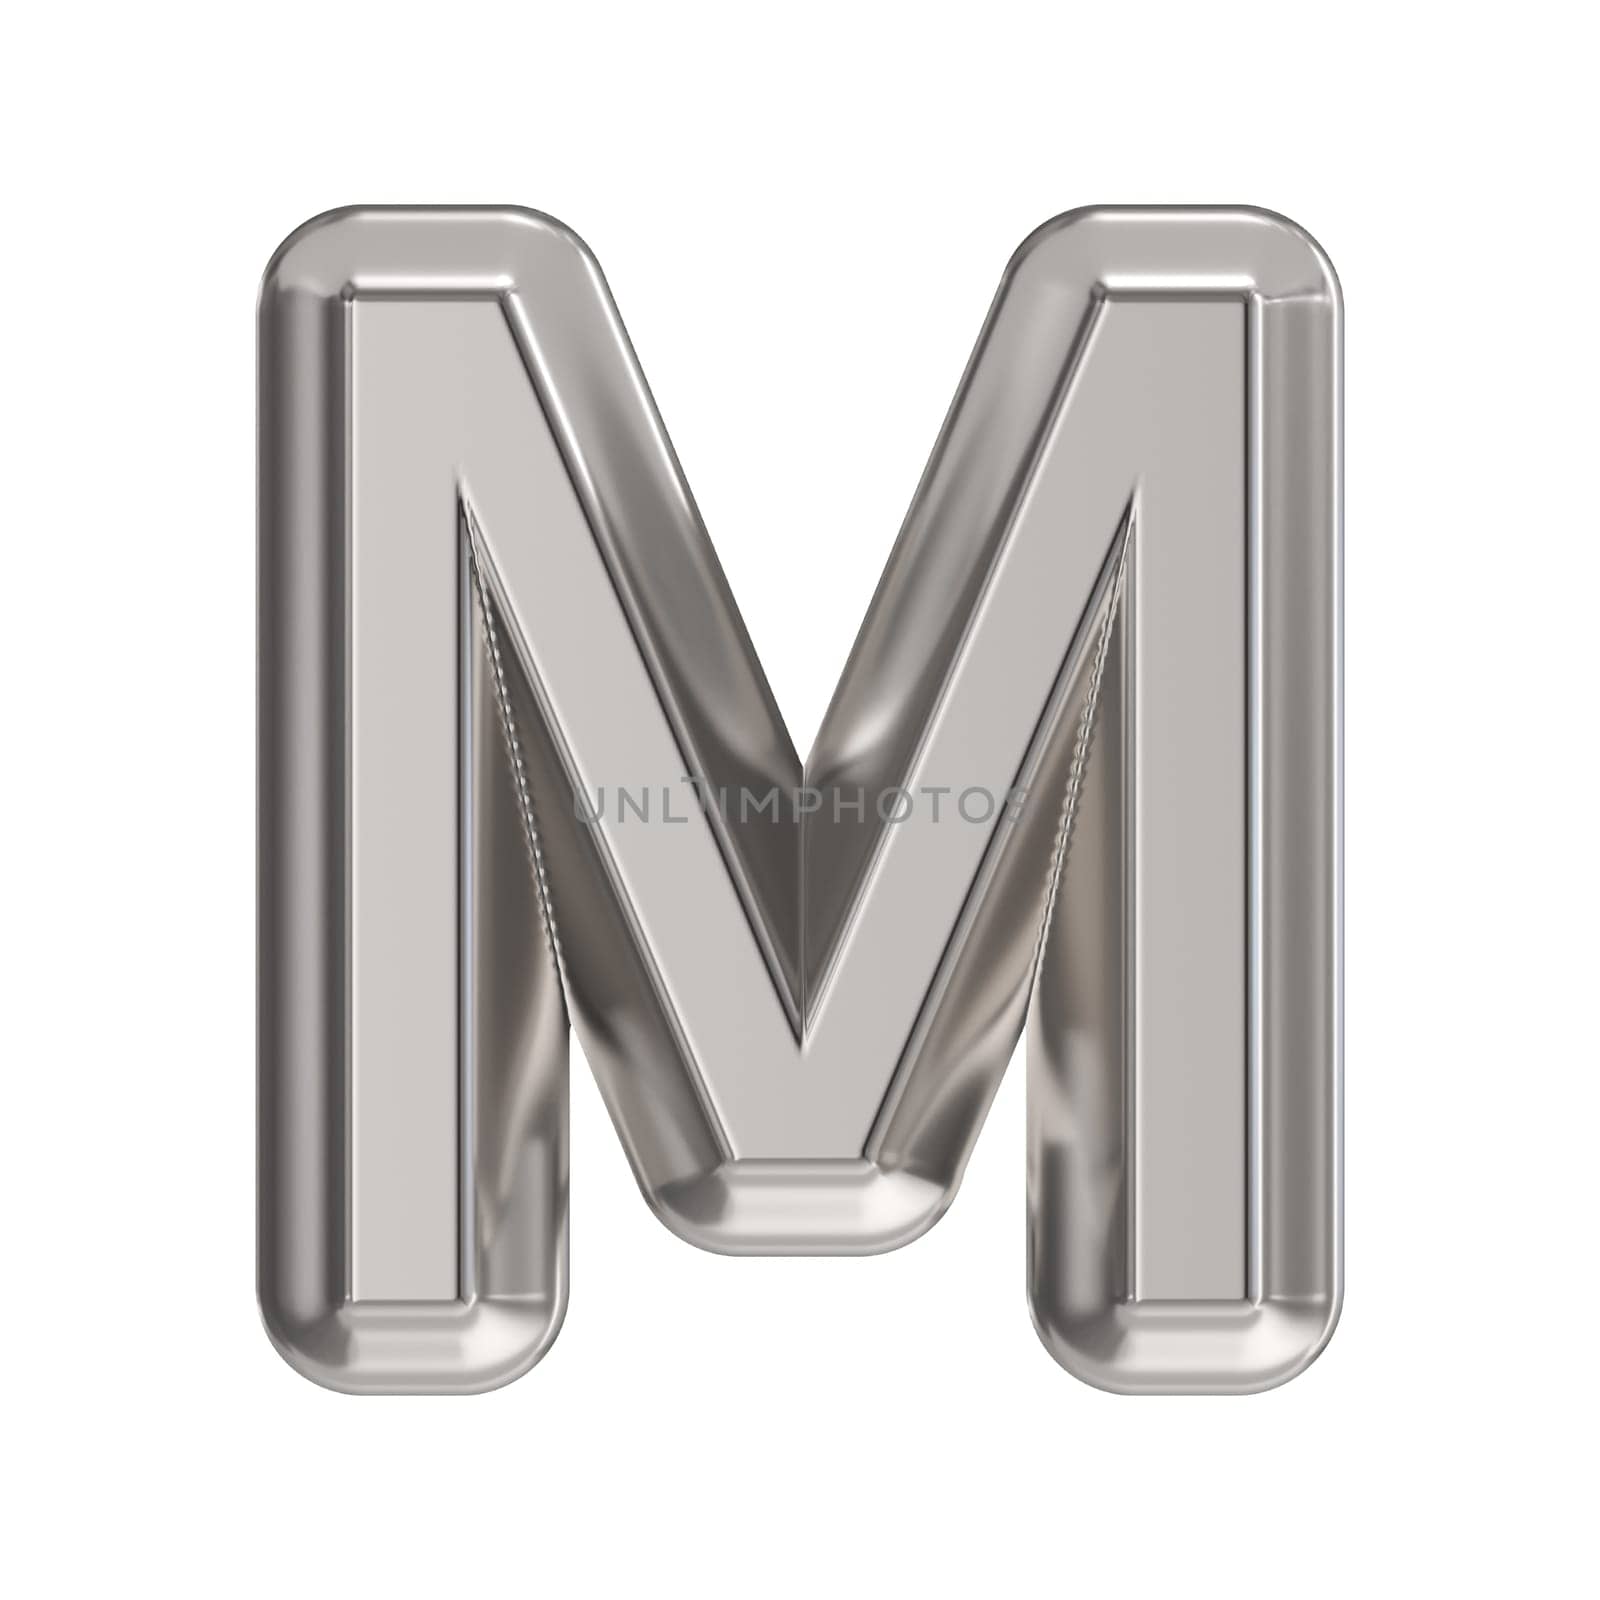 Steel font Letter M 3D rendering illustration isolated on white background